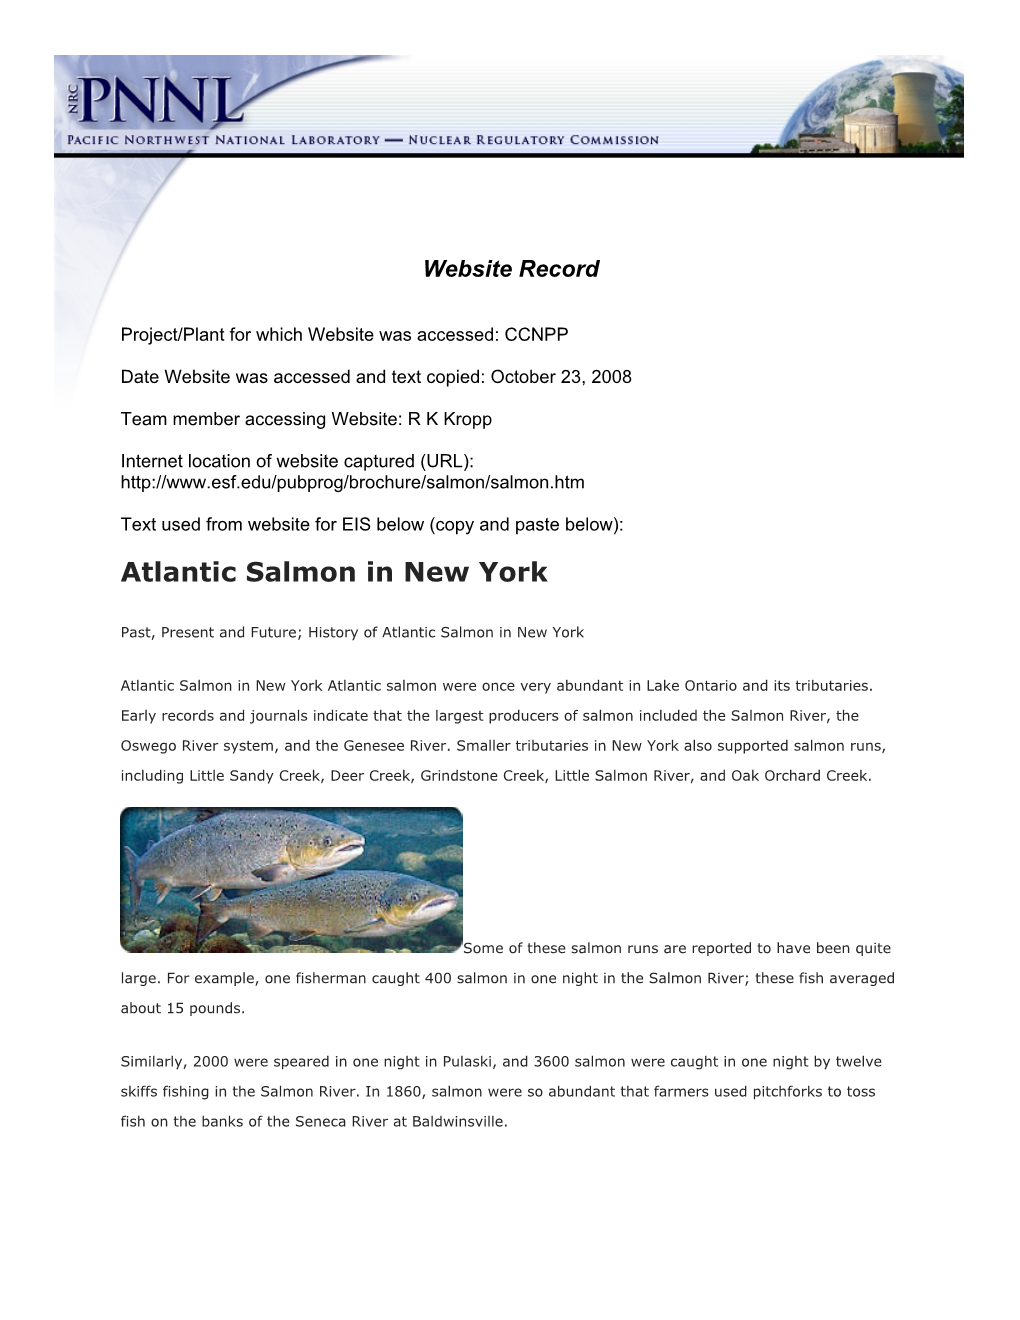 Atlantic Salmon Website Record, 2009